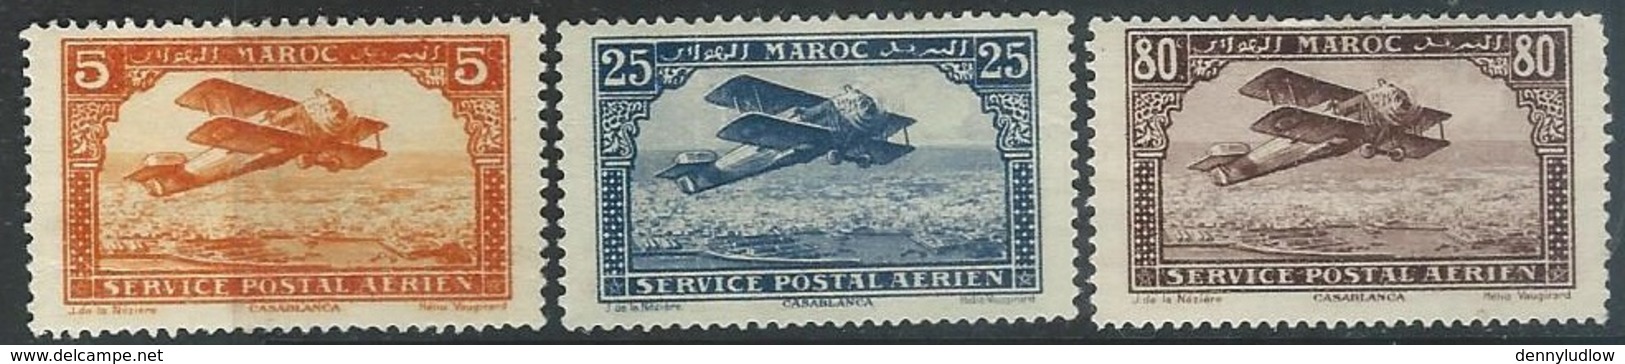 Fr Morocco  1922-7   Sc#C1-2, C6   3 Airmails MH*  2016 Scott Value $4.10 - Airmail